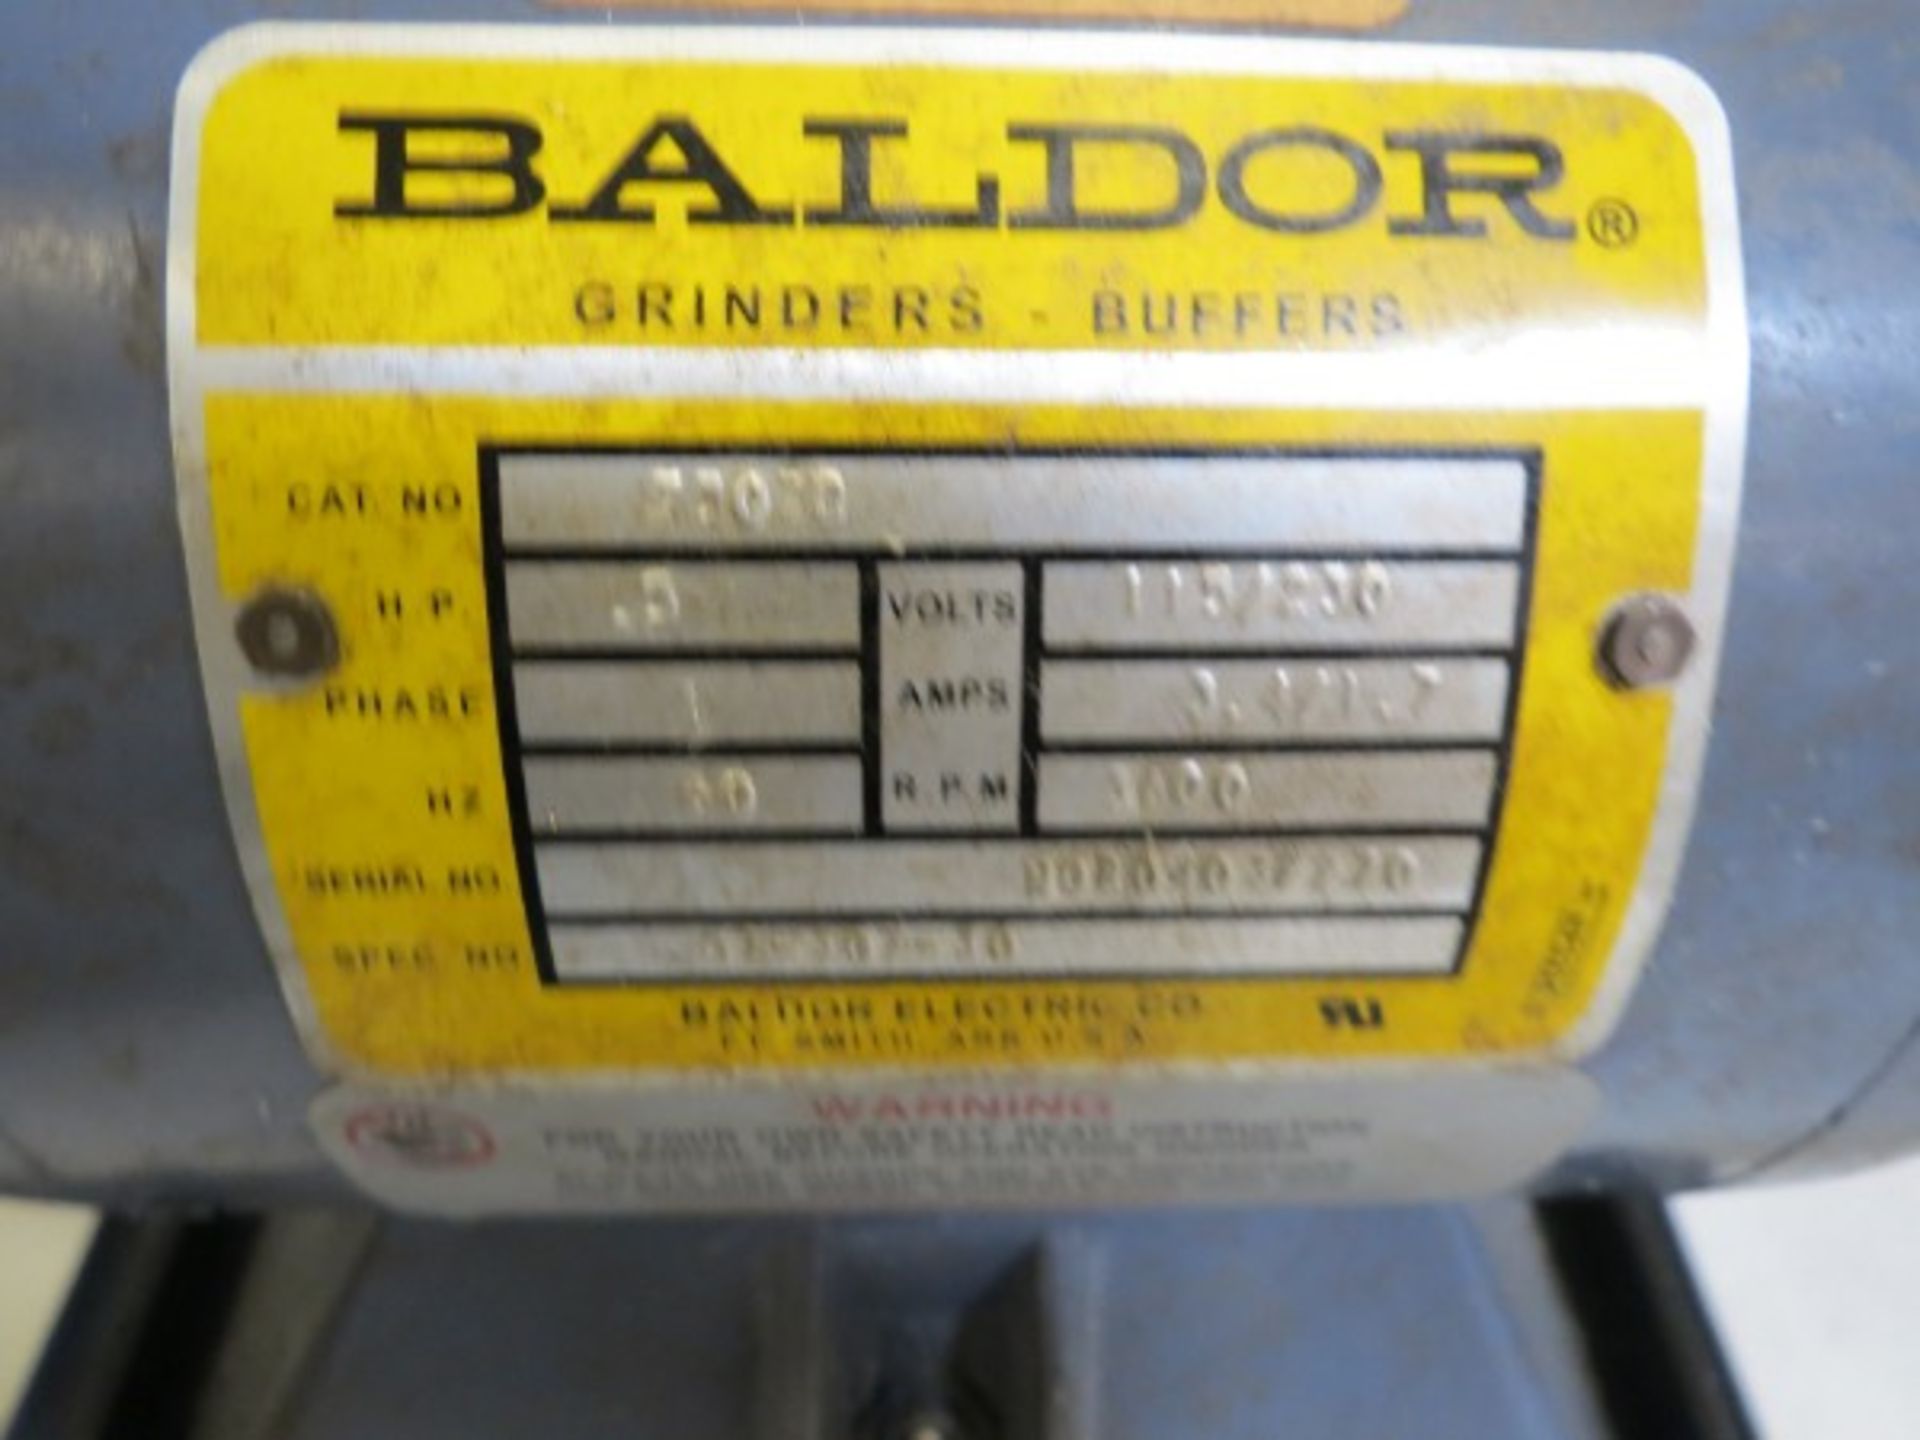 Baldor 1/2HP Grinder Buffer, S/N H0804032270 - Image 3 of 3